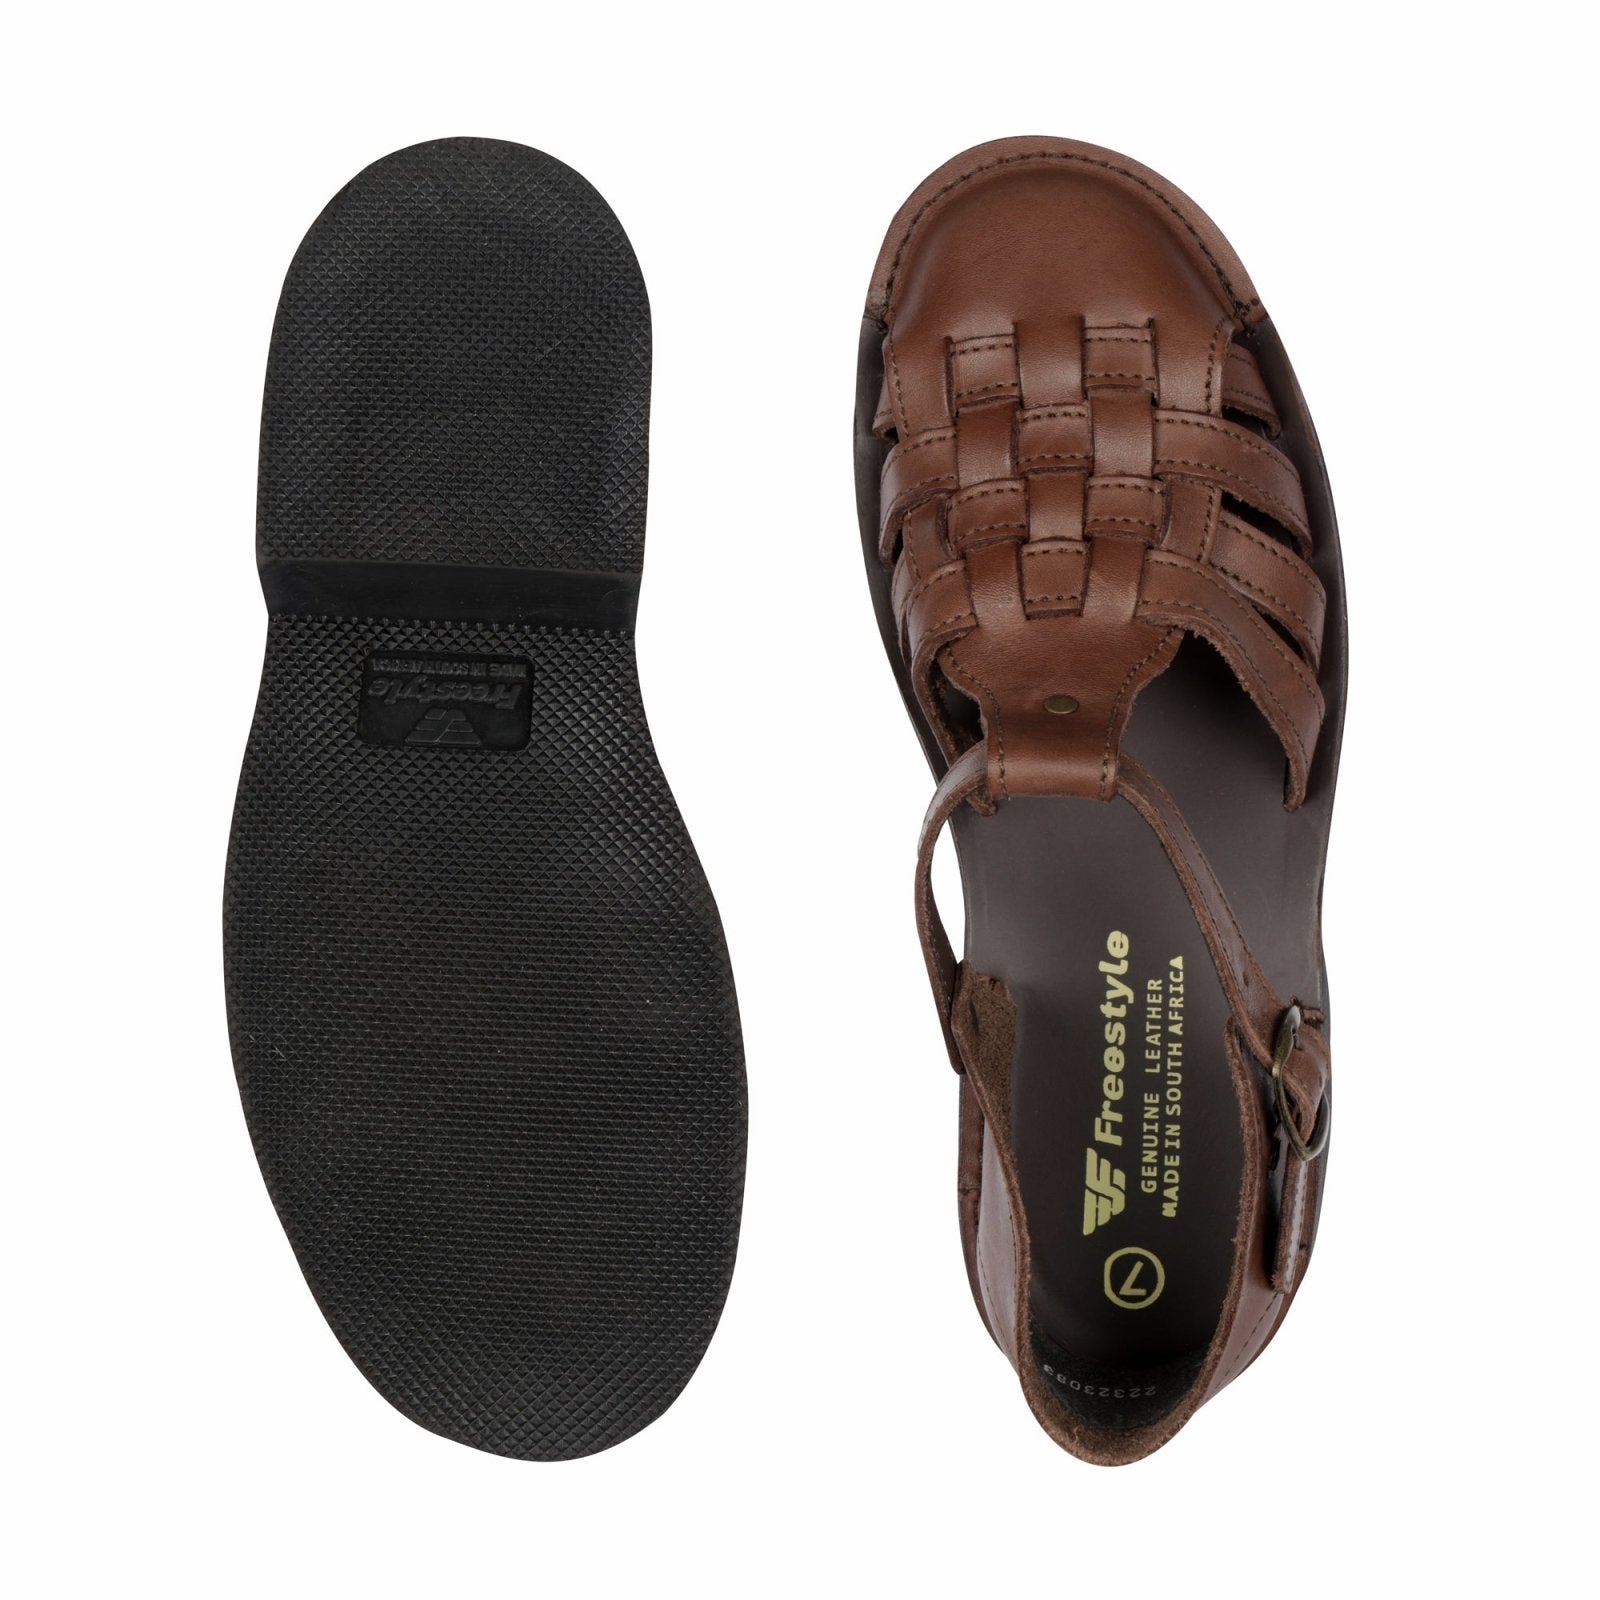 Salt-Water Sandals Salt-Water Original Sandals - Navy - Waterproof Leather  unisex (bambini)